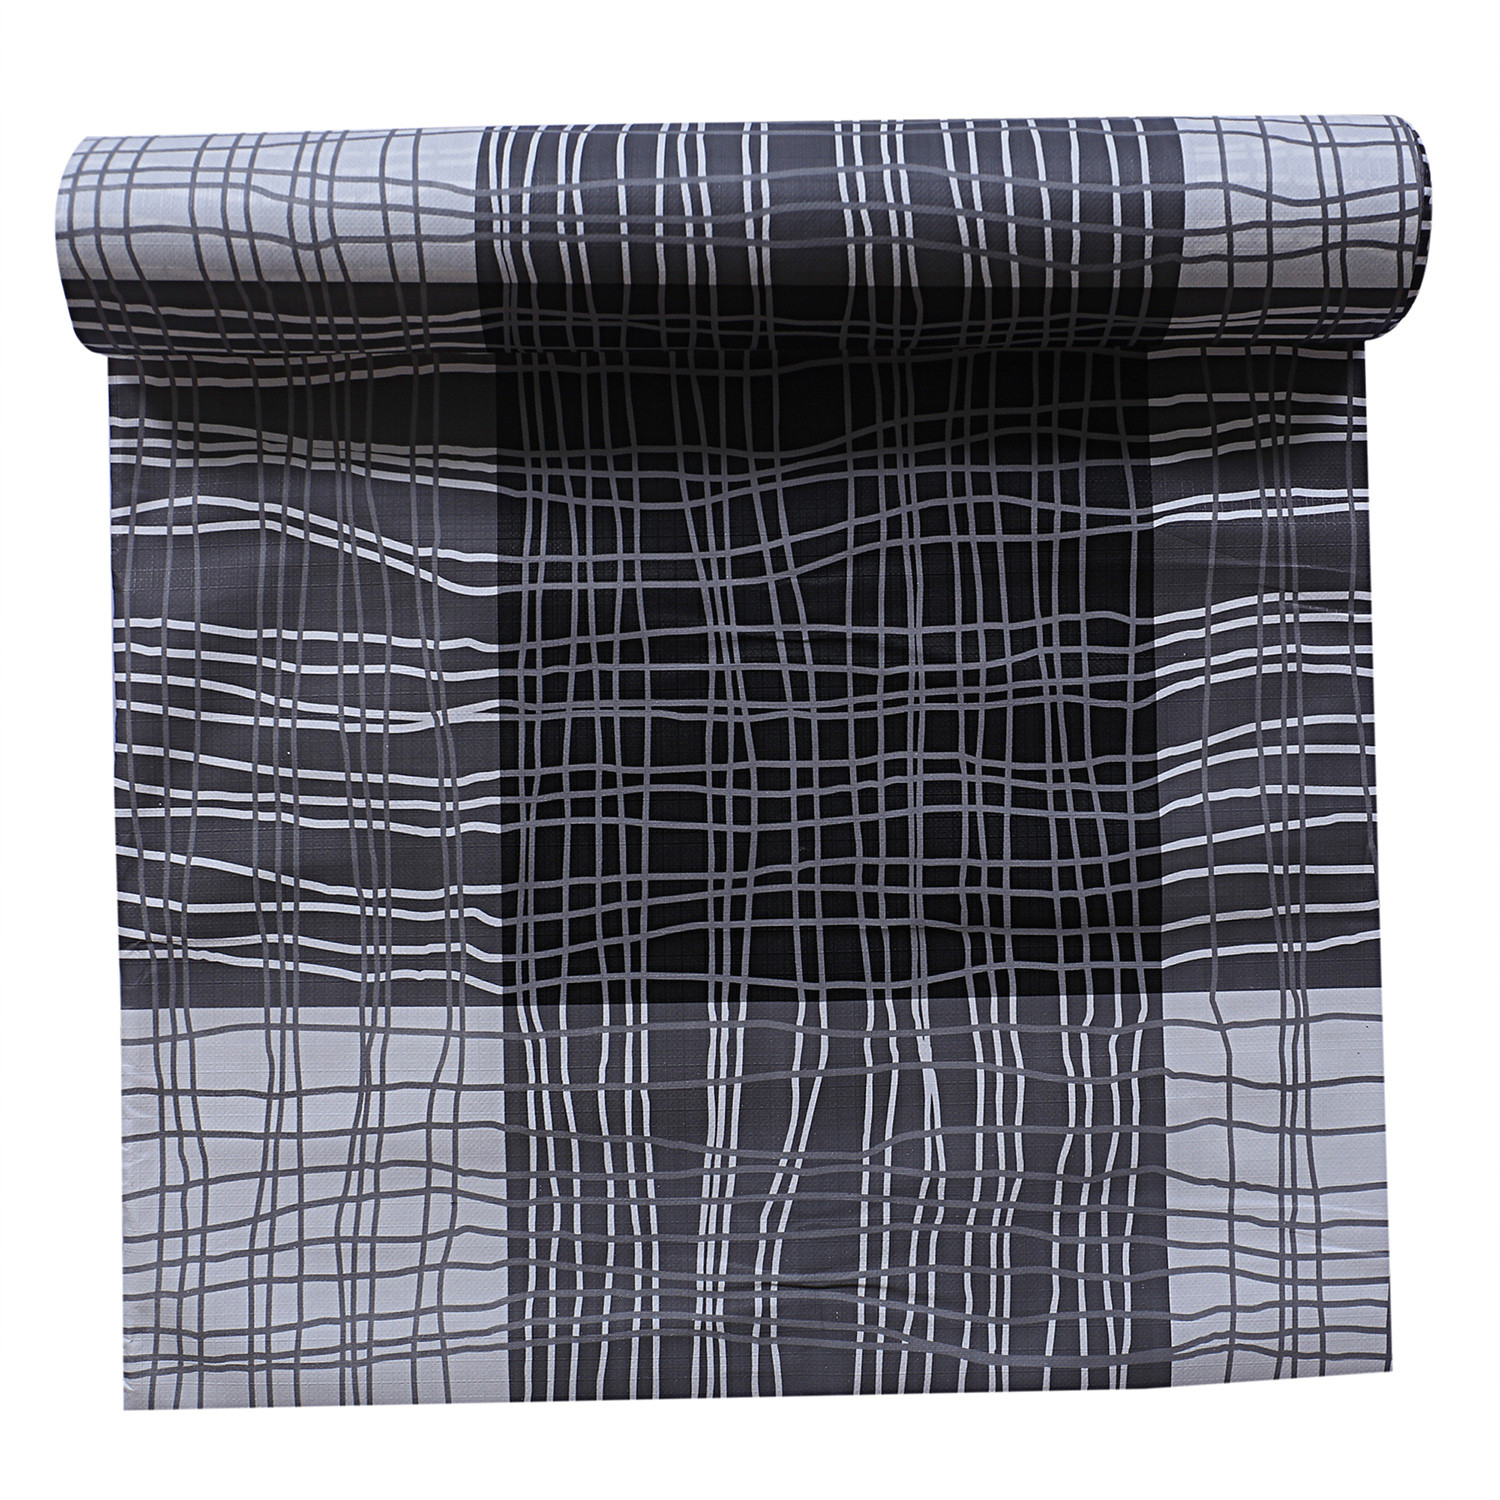 Kuber Industries Shelf Mat|Waterproof Strips Print PVC Anti-Slip Sheets|Durable Kitchen Cabinet Drawer Shelf Liner,5 Meter,(Gray)